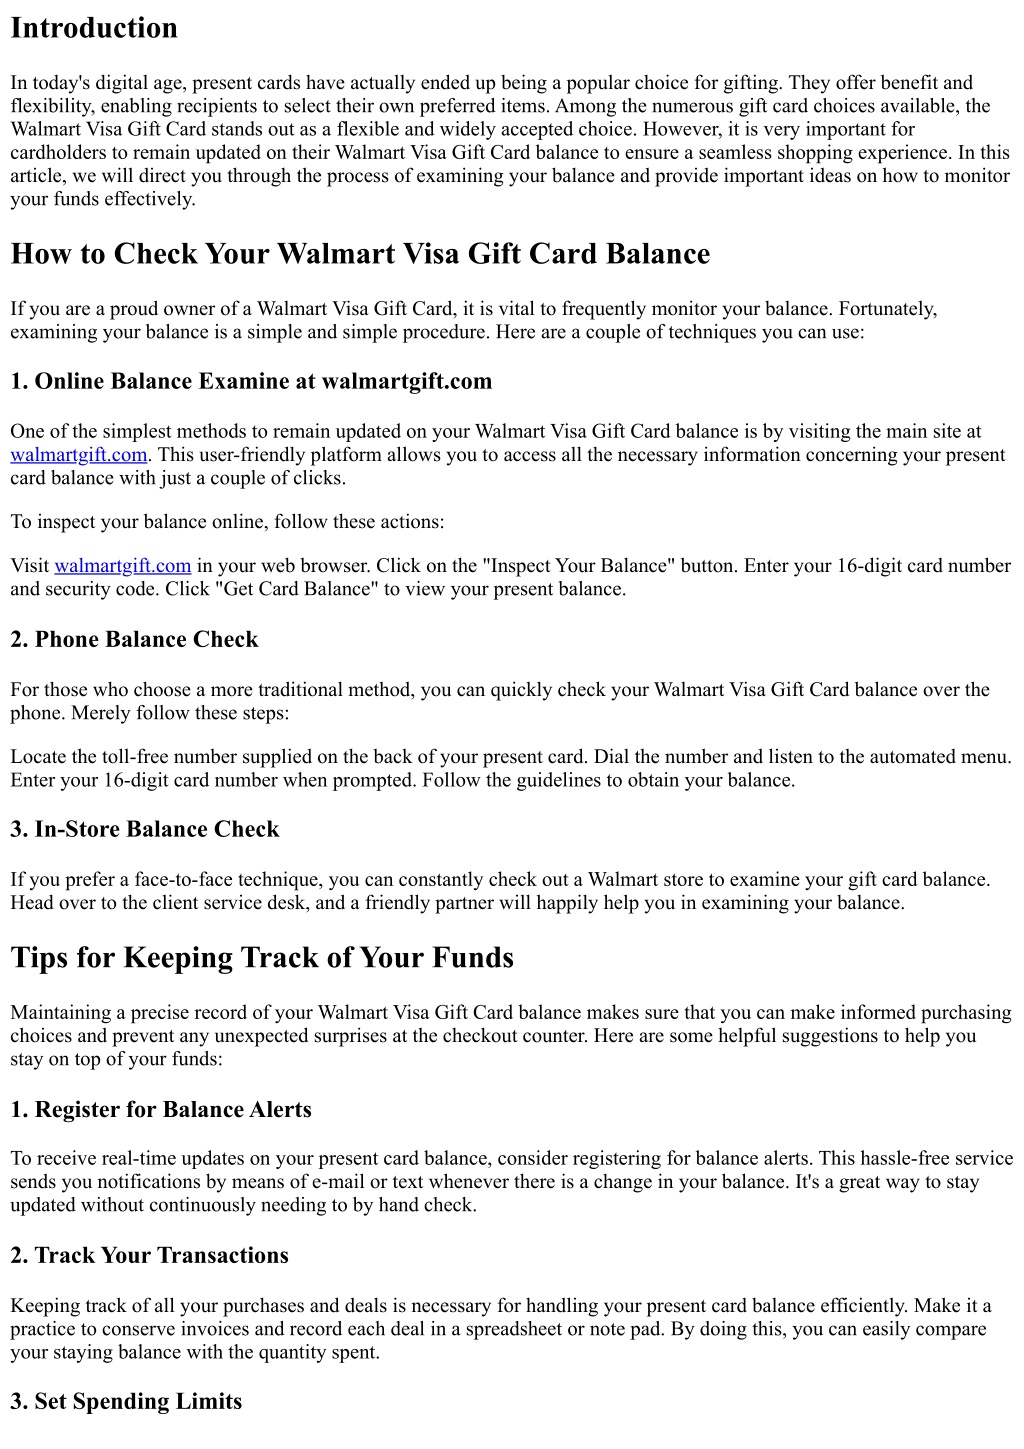 Fanatics Gift Cards: Buy Gift Cards & Check Your Balance | Fanatics